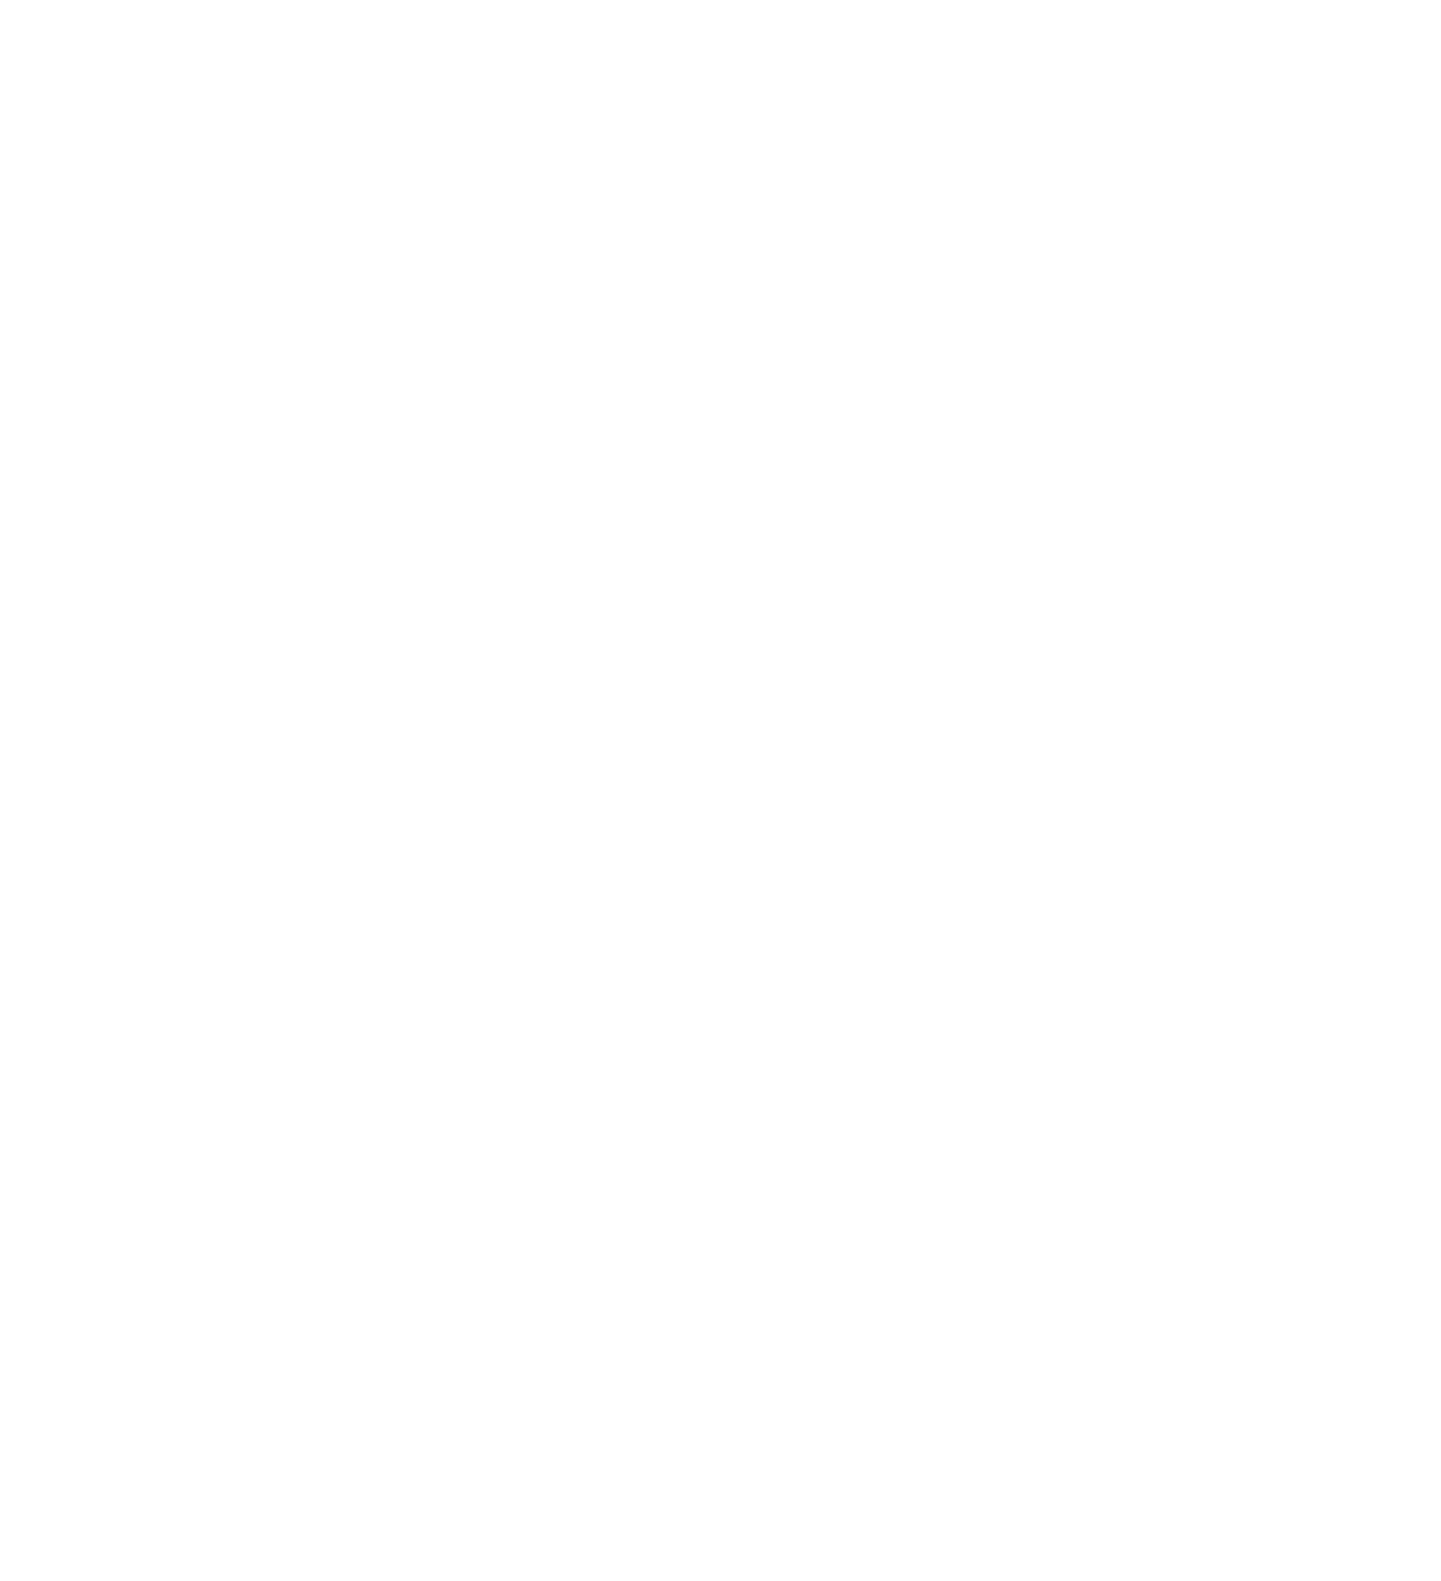 Alamo Group logo large for dark backgrounds (transparent PNG)